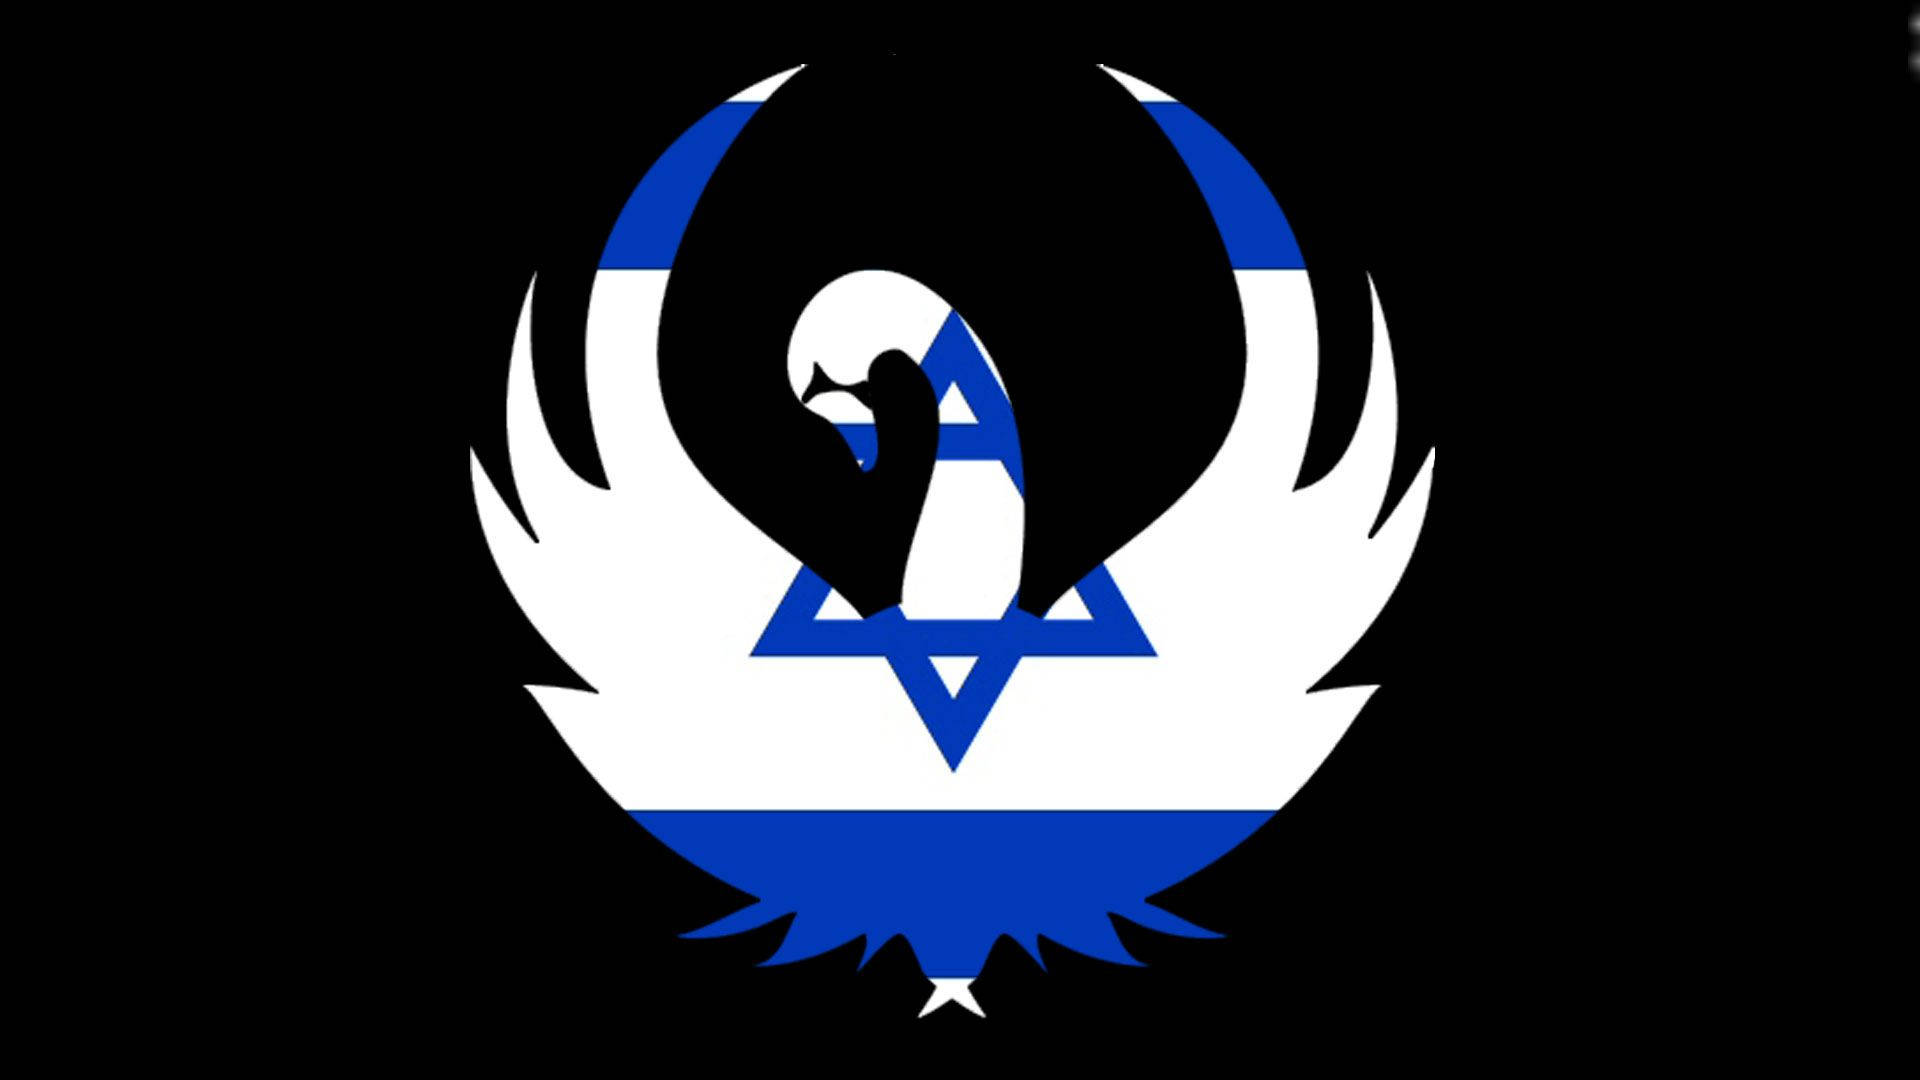 Israel Flag Swan Art Wallpaper